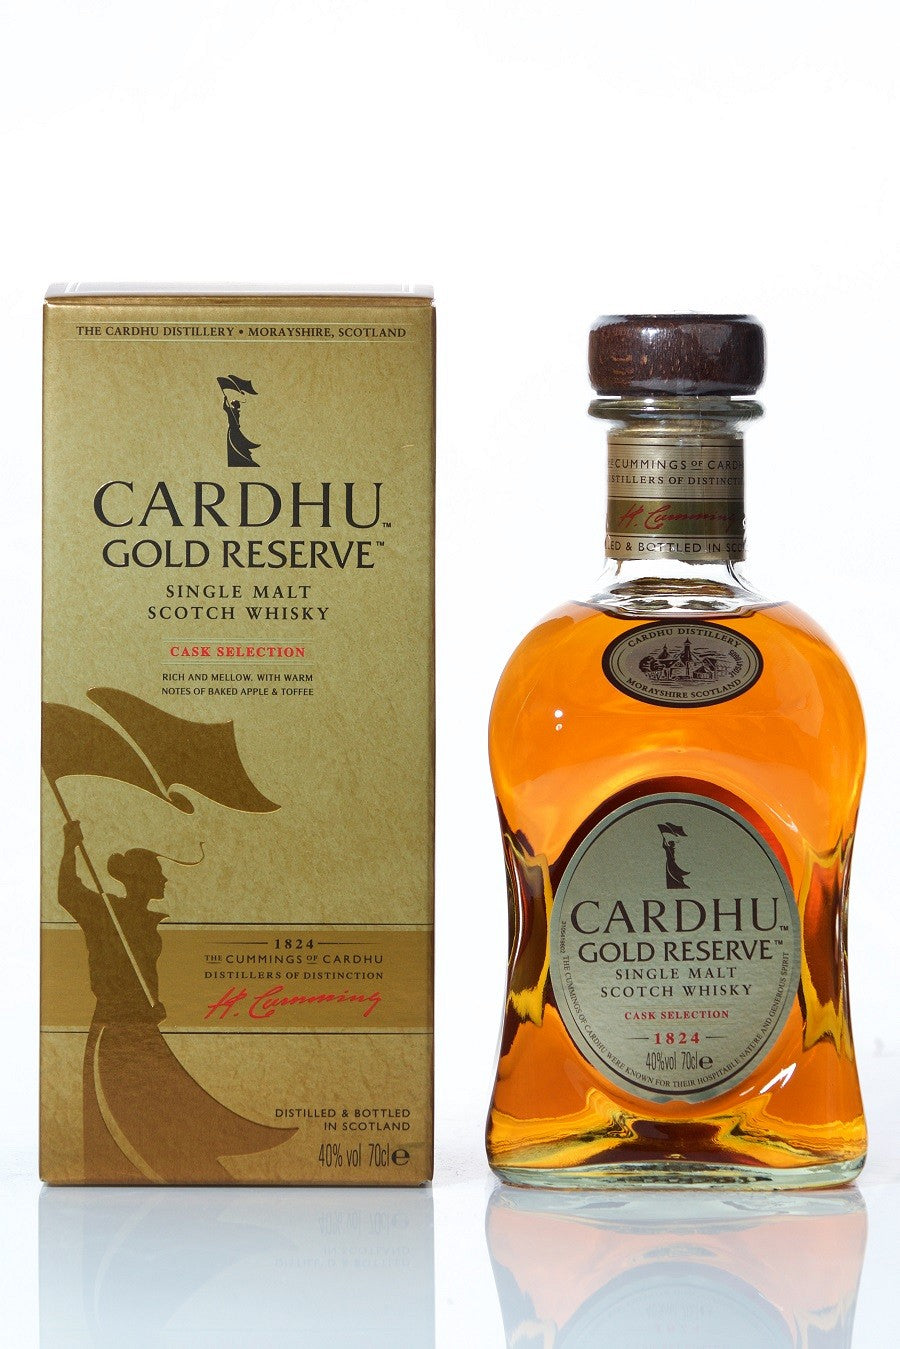 Cardhu Gold Reserve Single Malt Scotch Whisky, 40% vol, 70cl, Scottish  Whisky, Notes of Baked Apple & Toffee